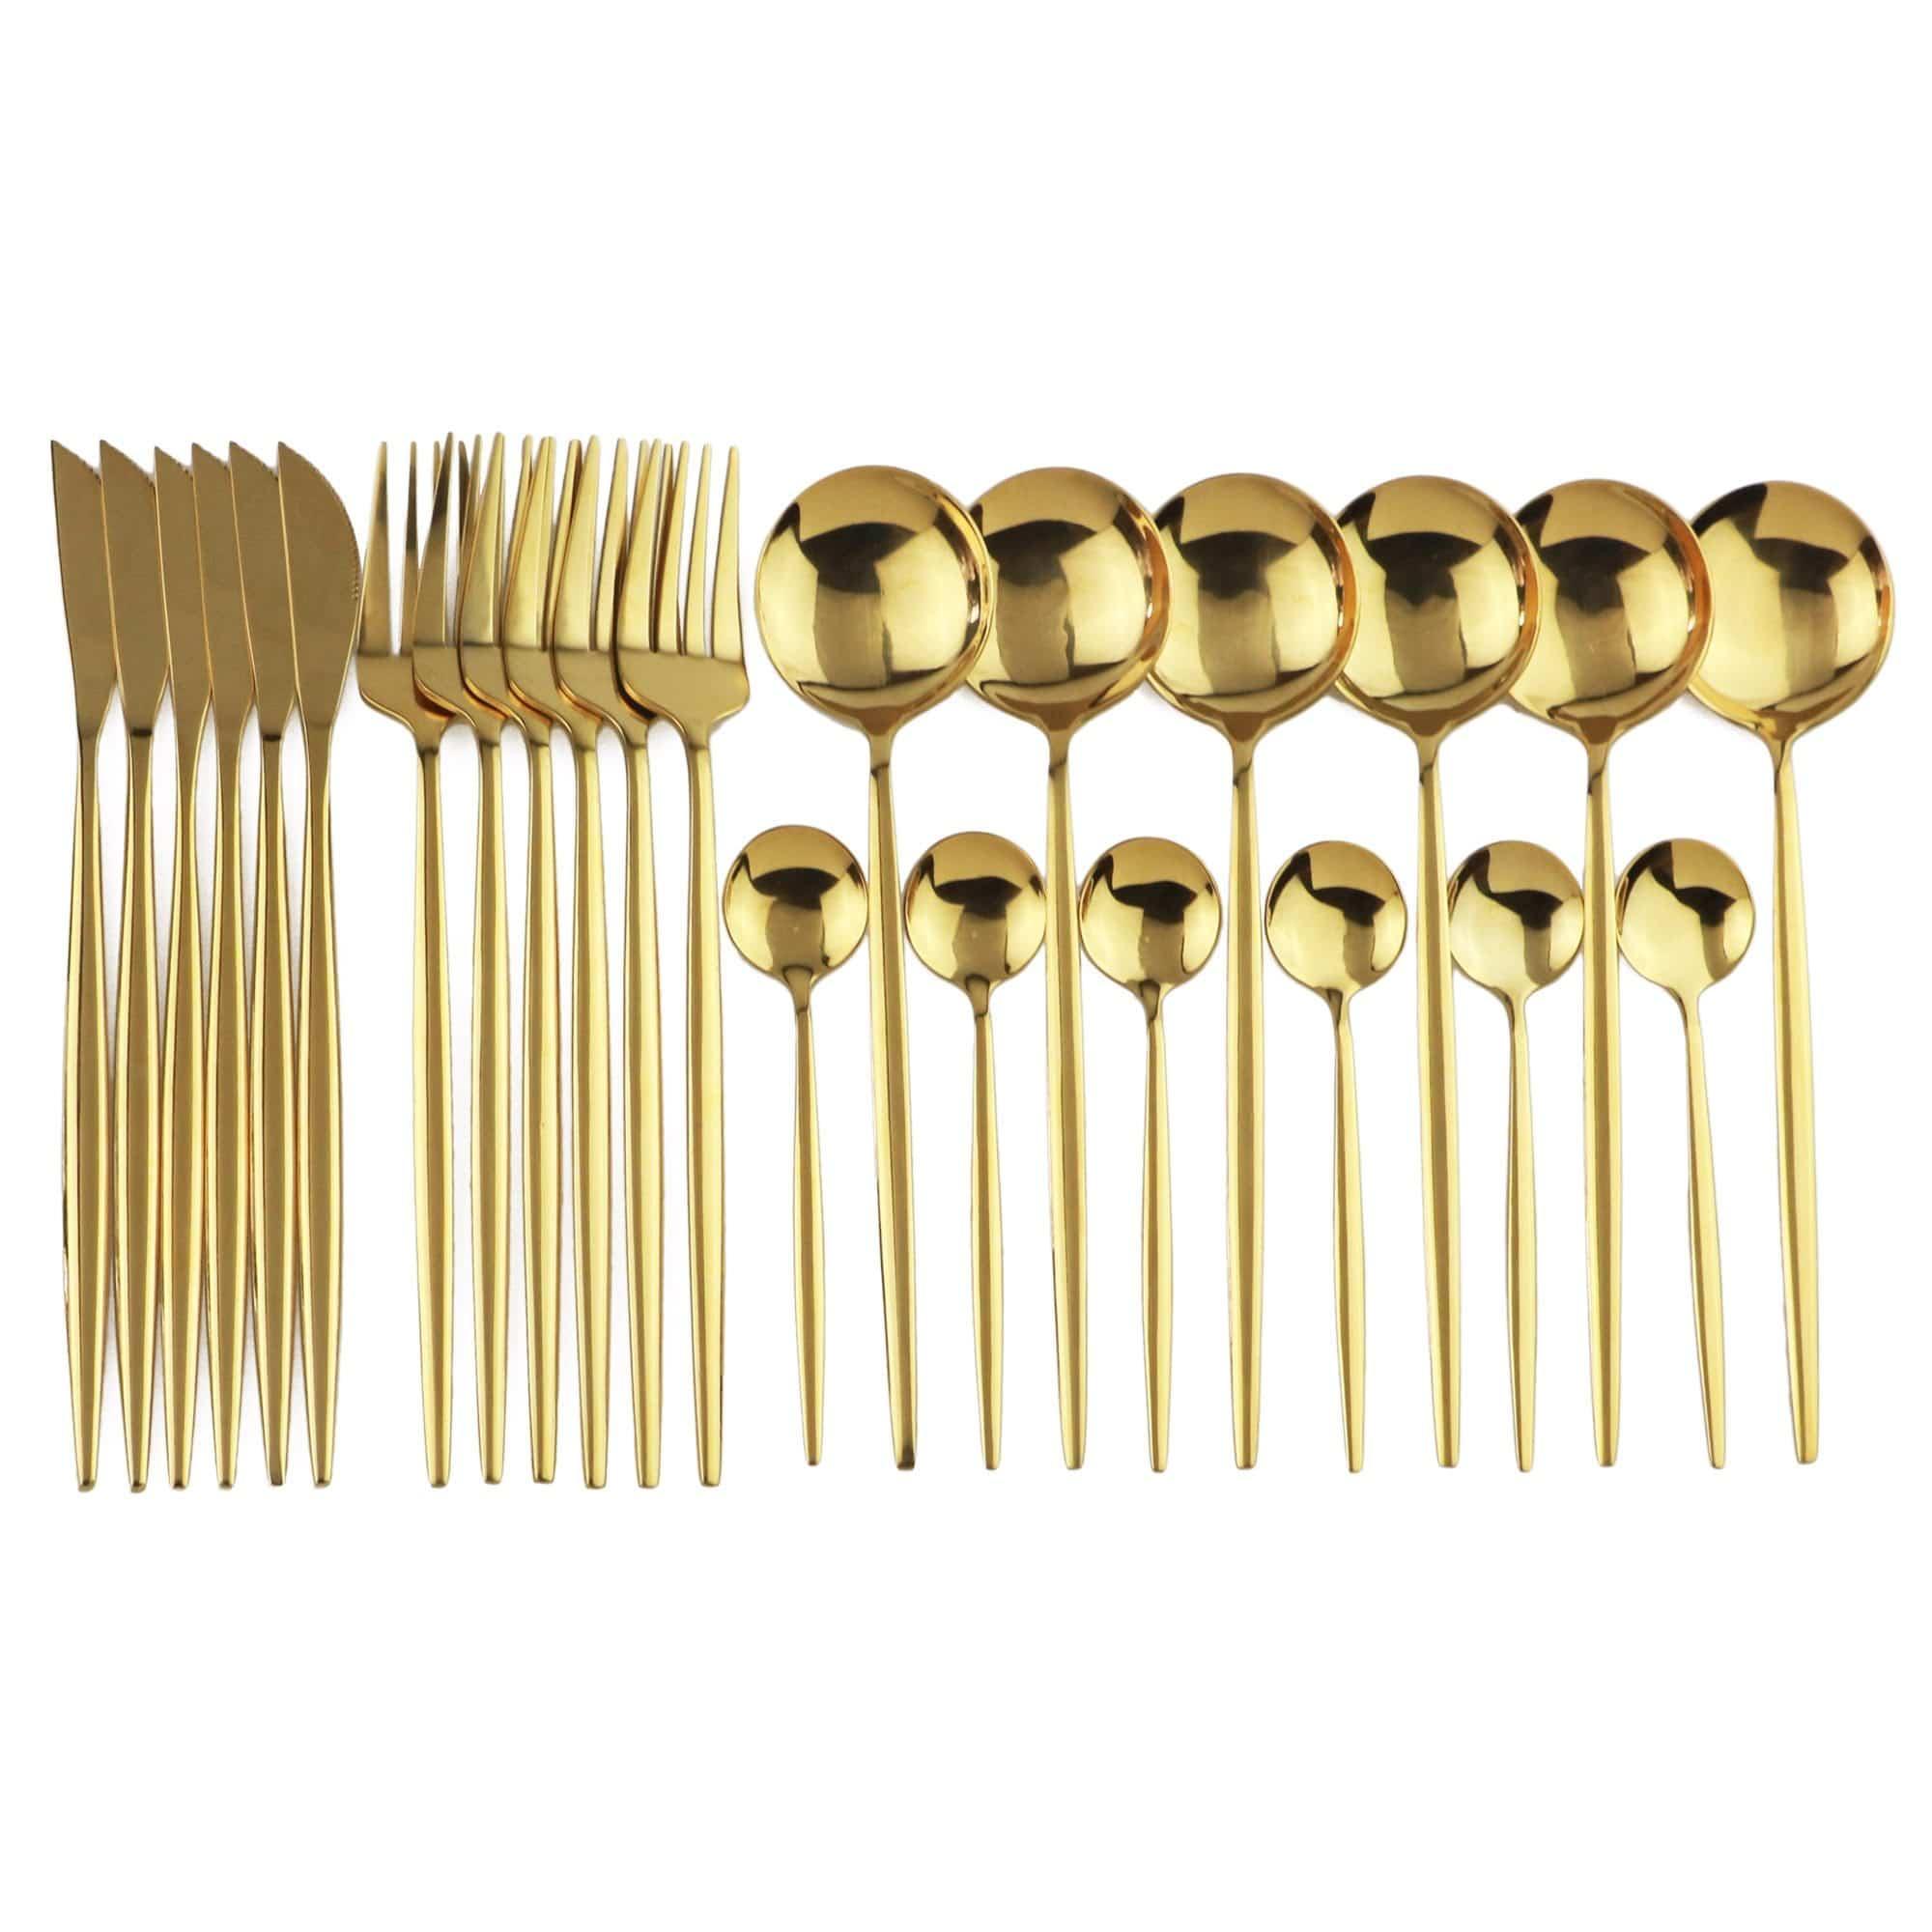 Shop 100003310 24Pcs Gold Casper Cutlery Set Mademoiselle Home Decor